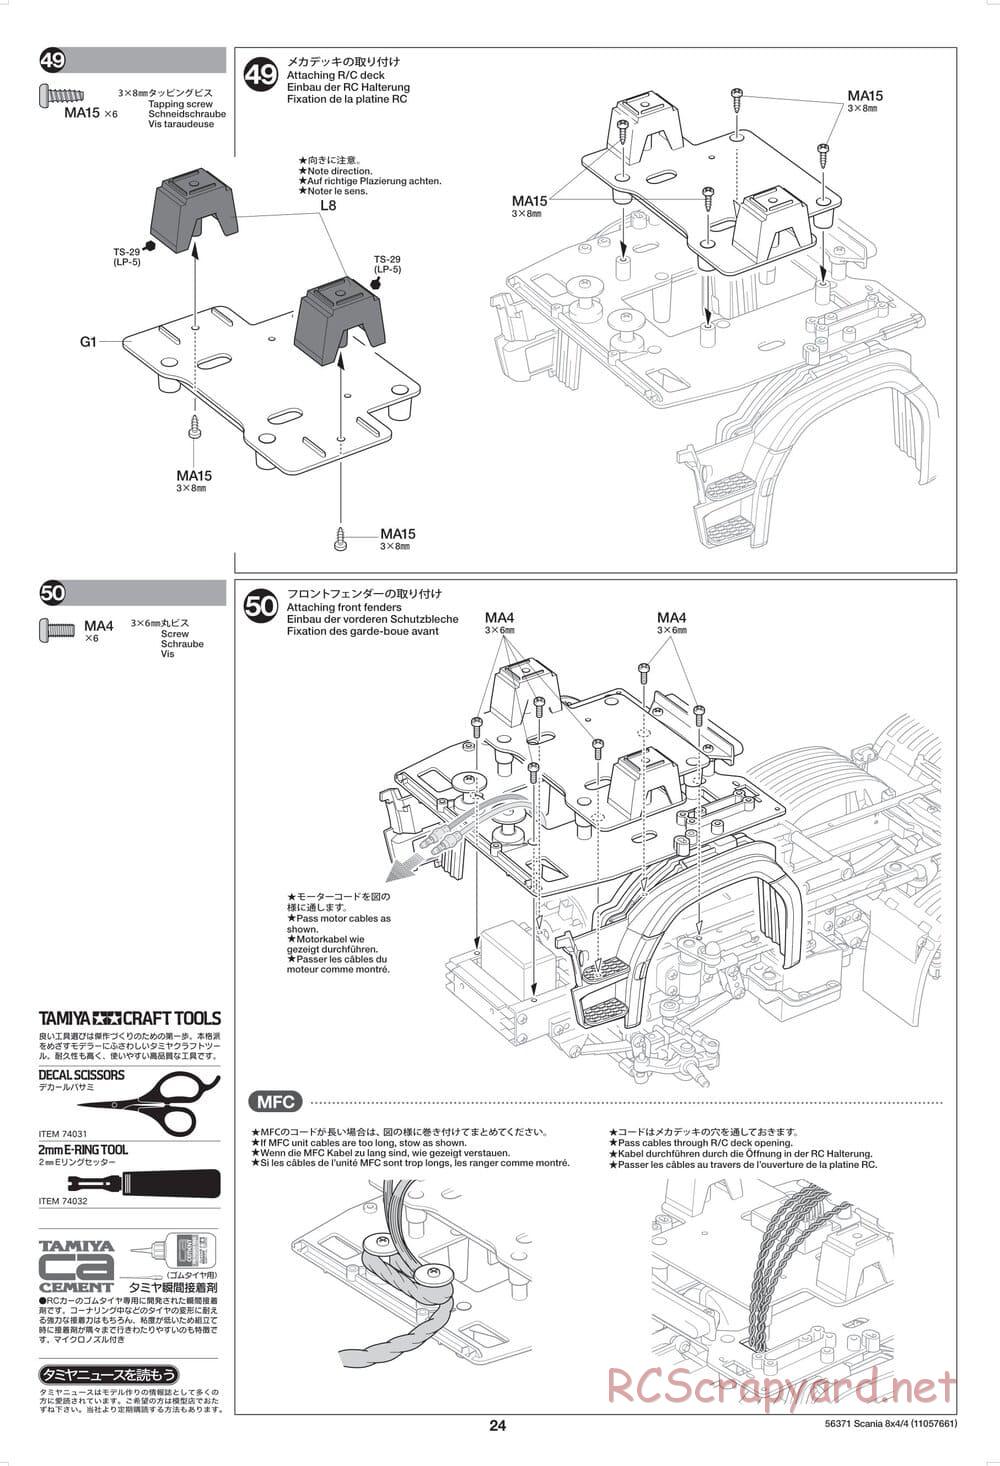 Tamiya - Scania 770 S 8x4/4 Chassis - Manual - Page 24